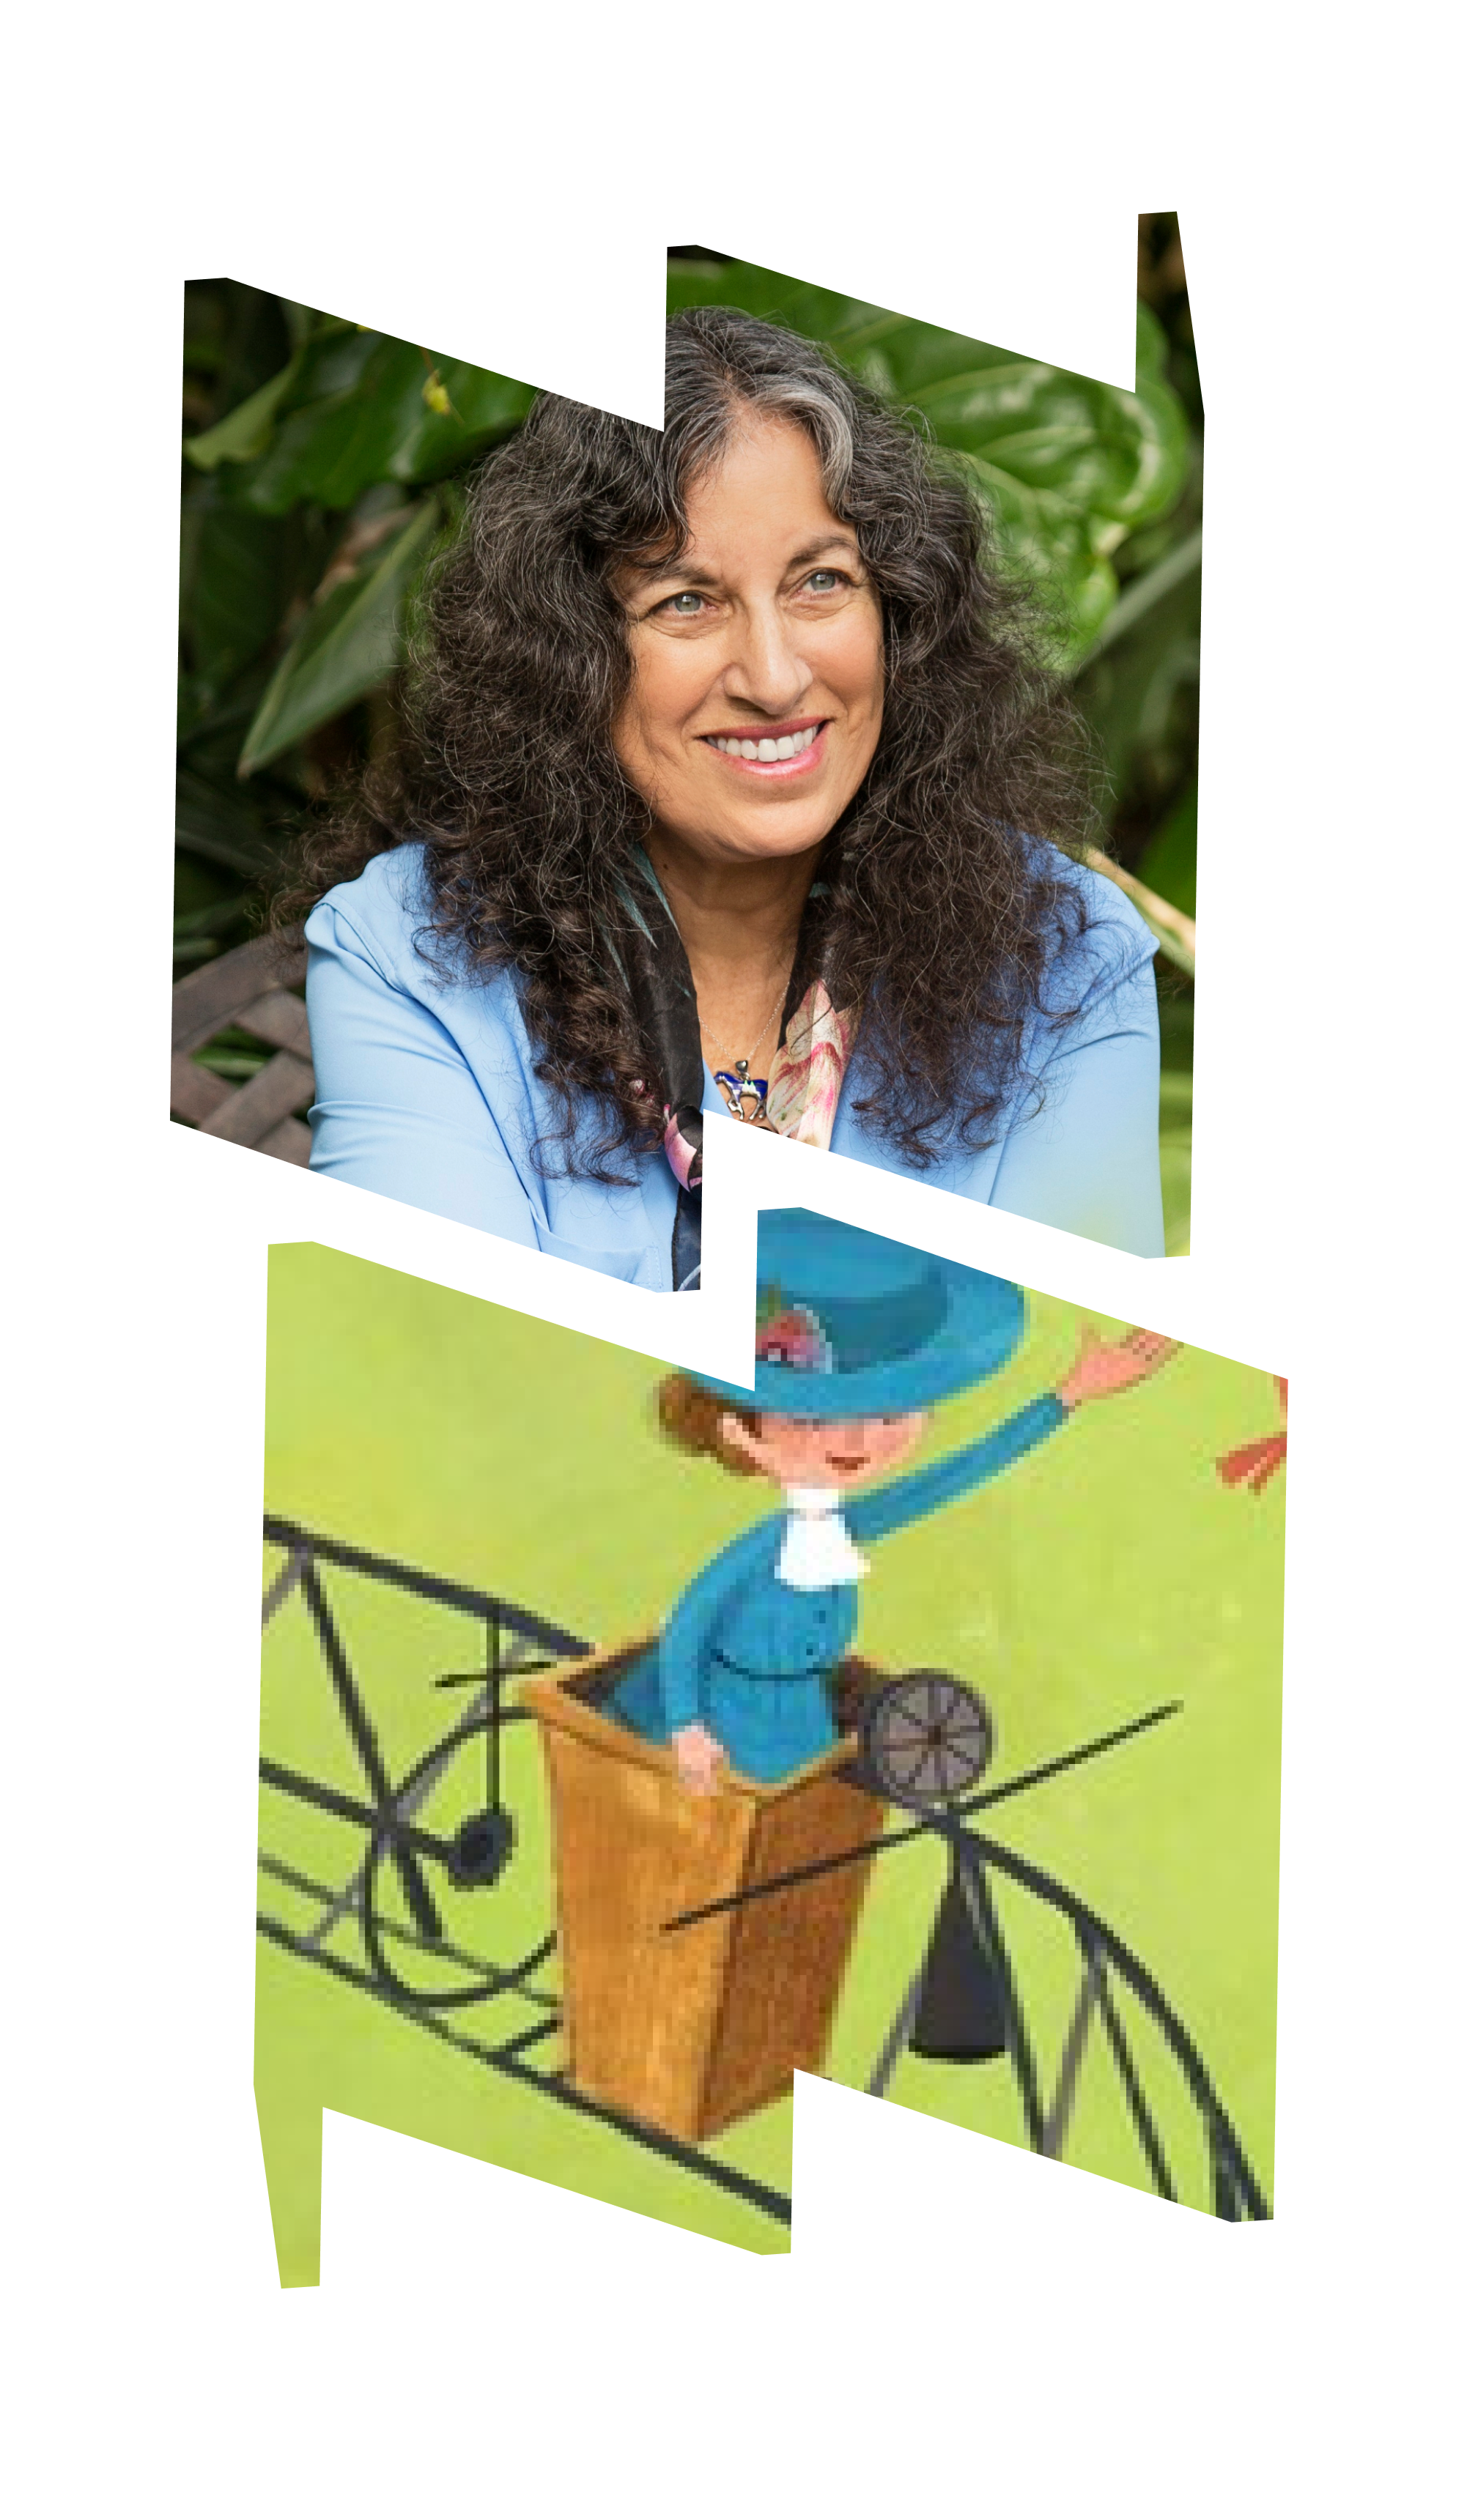 In top "W" frame, headshot of author Margarita Margarita Engle; in bottom "M" frame, illlustration of Aída de Acosta from book cover.